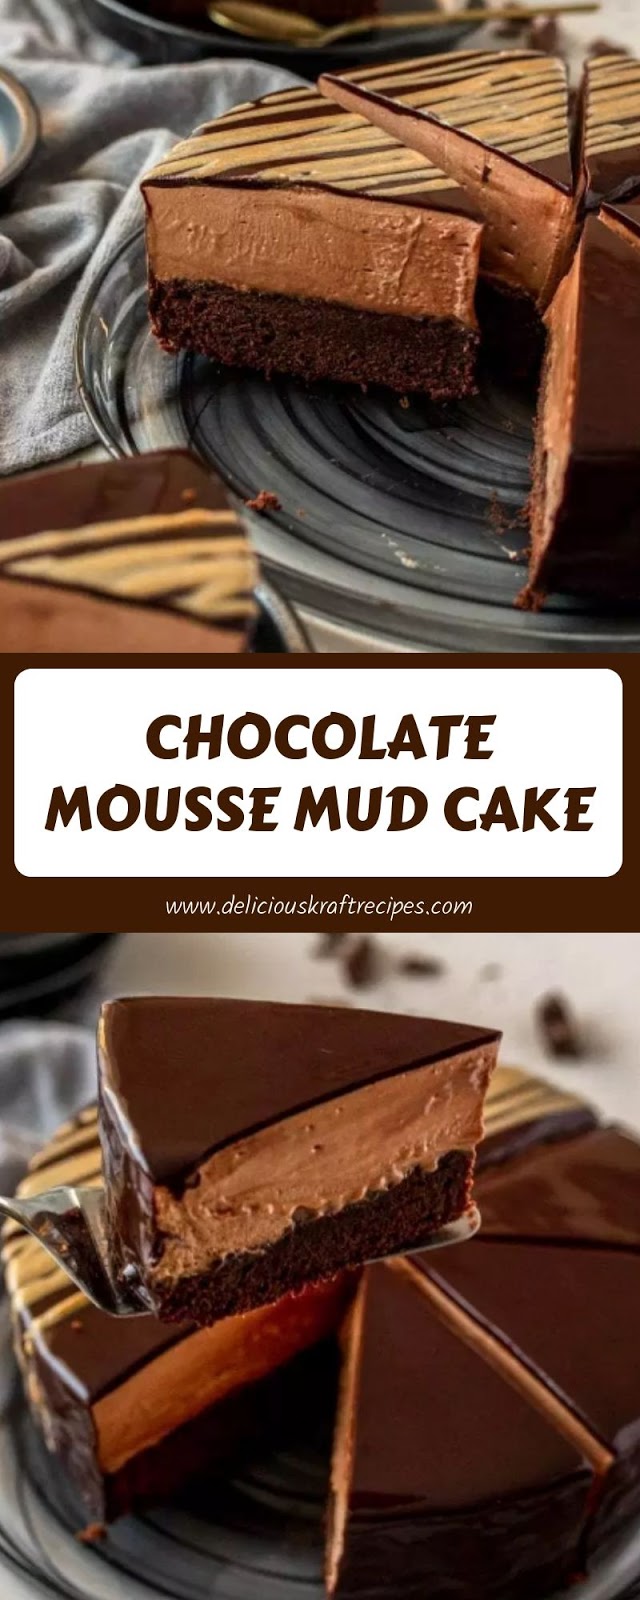 CHOCOLATE MOUSSE MUD CAKE